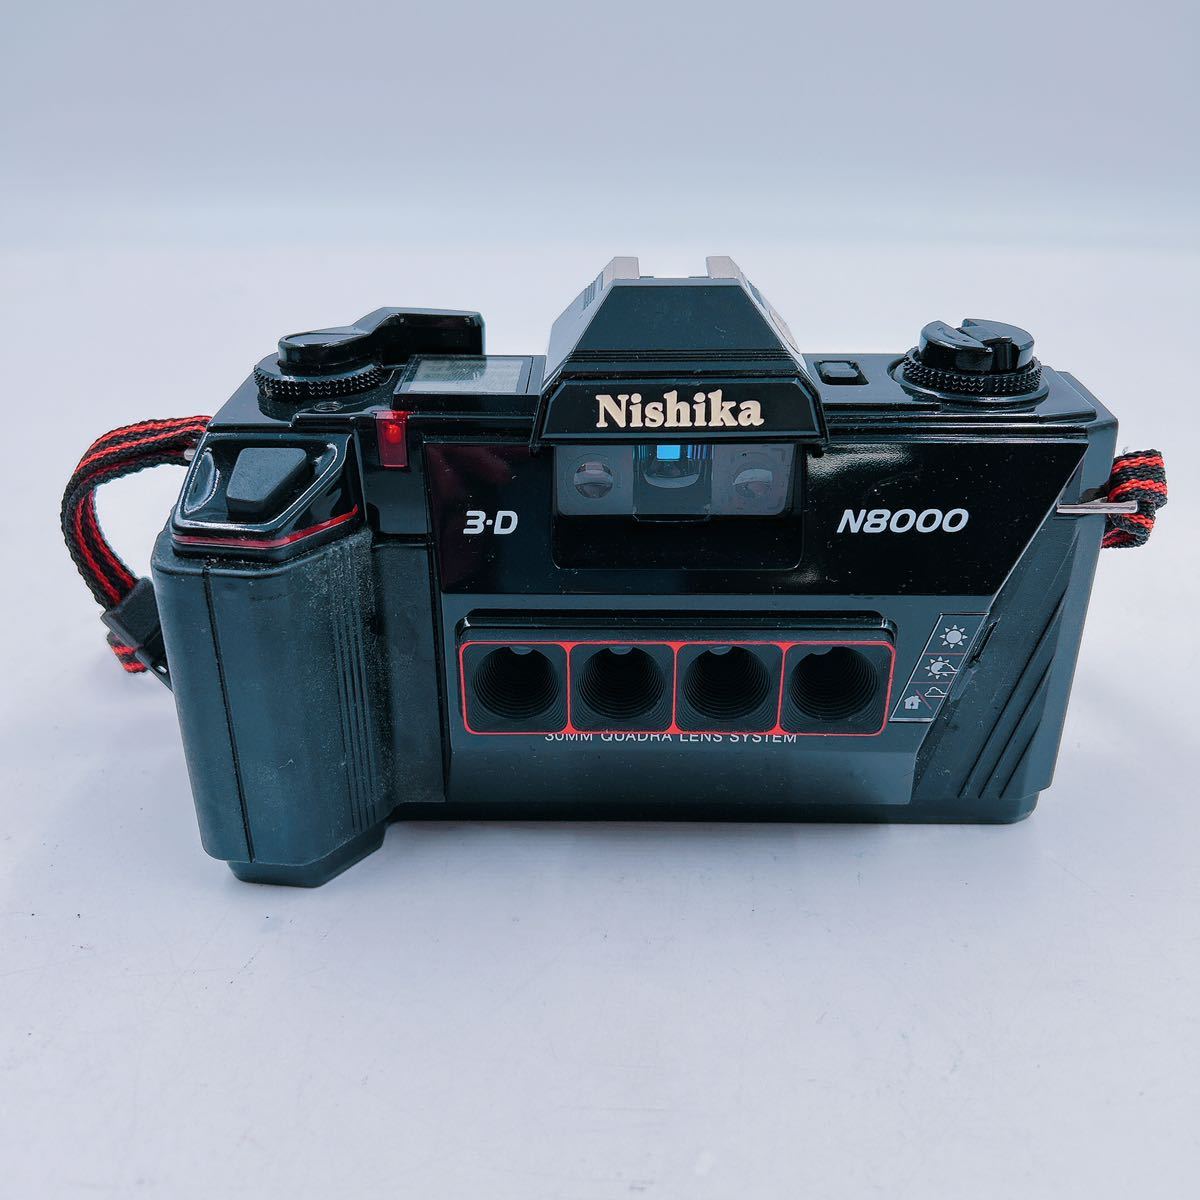 10C32 Nishika ニシカ フィルムカメラ N8000 30mm quadra lens system レトロ ケース付 _画像2